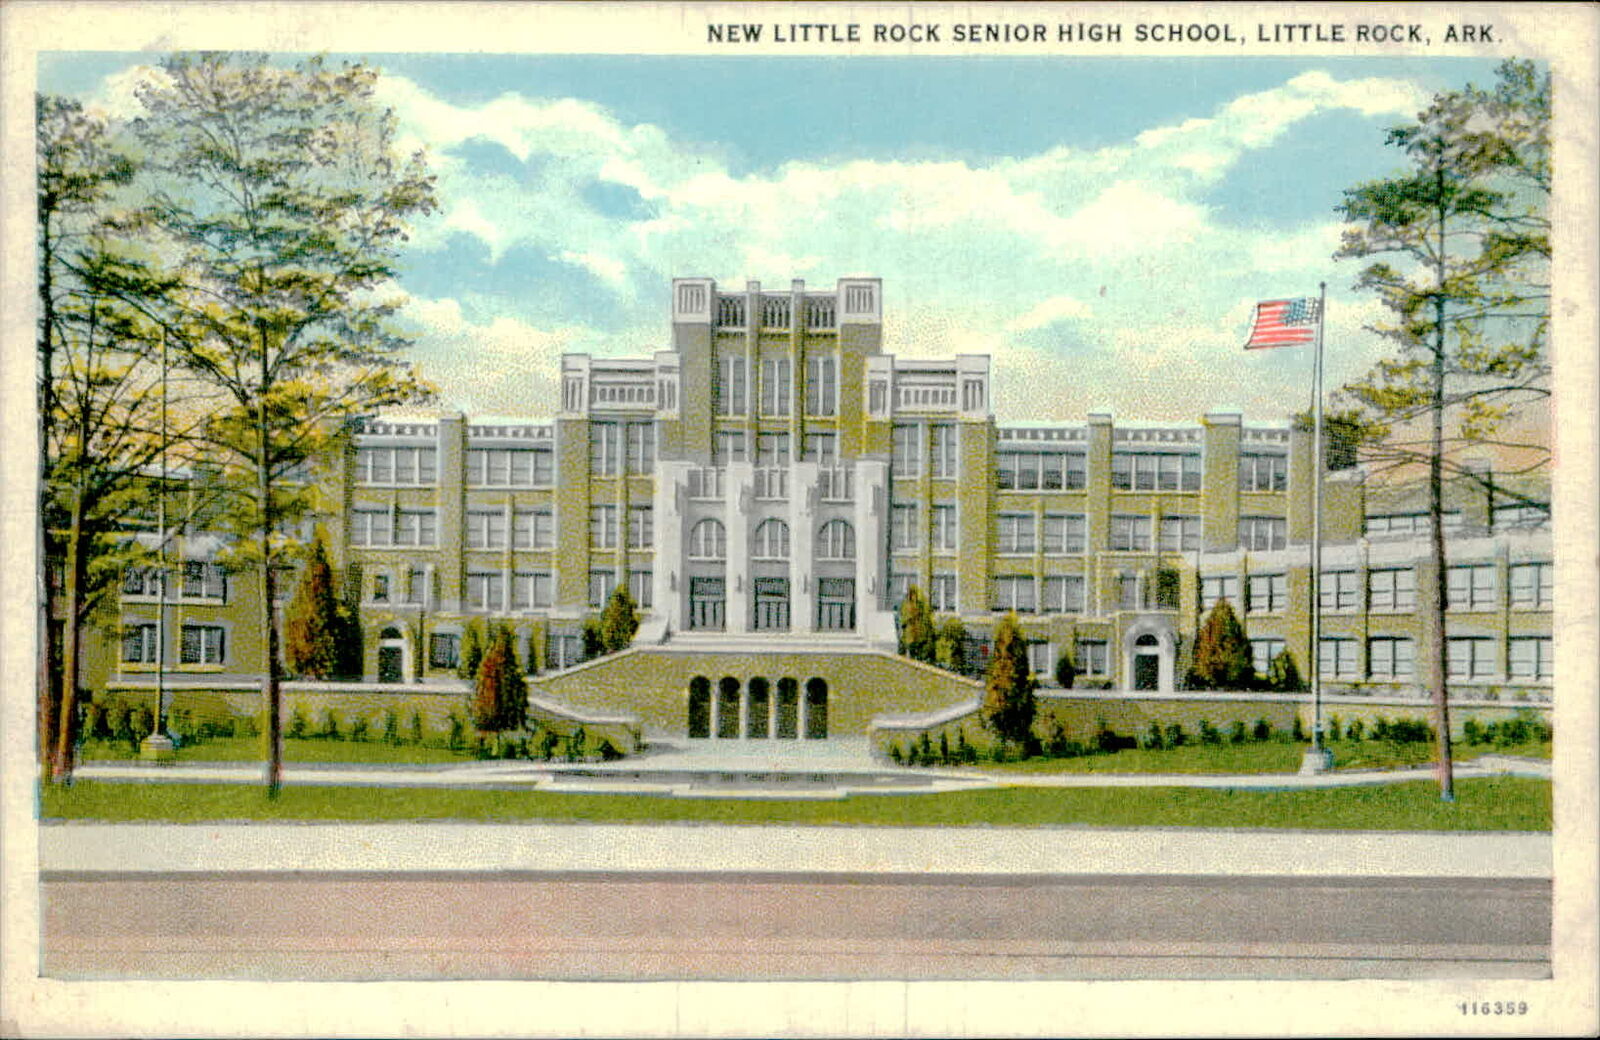 Postcard: NEW LITTLE ROCK SENIOR HIGH SCHOOL, LITTLE ROCK, ARK. 116